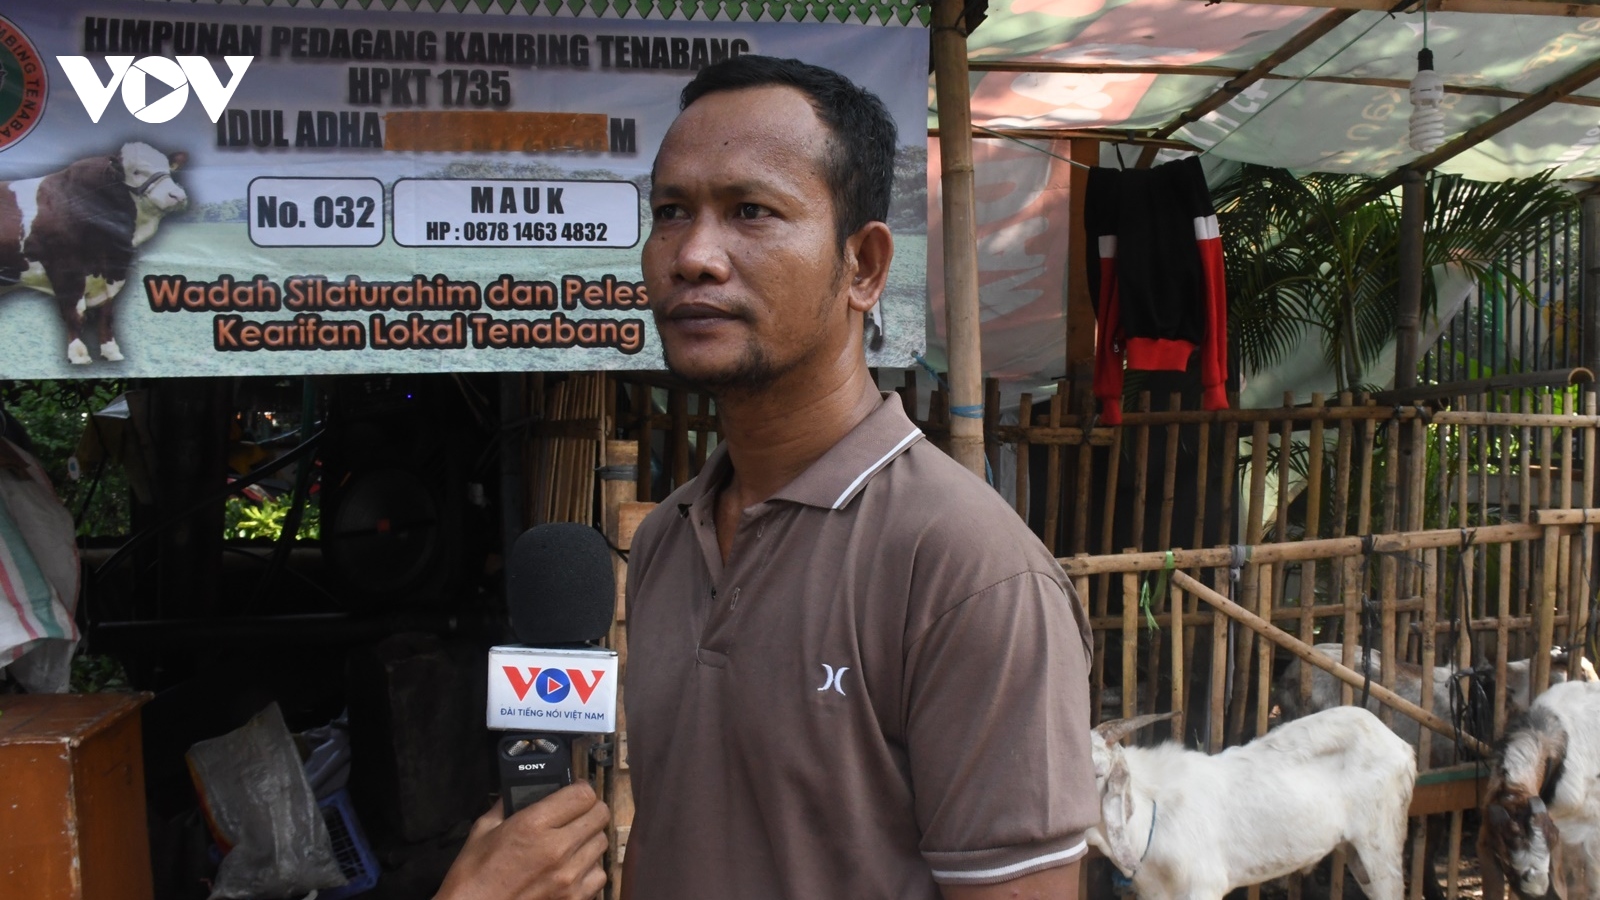 Nhộn nhịp chợ gia súc trước thềm Lễ hiến sinh Eid al-Adha tại Indonesia